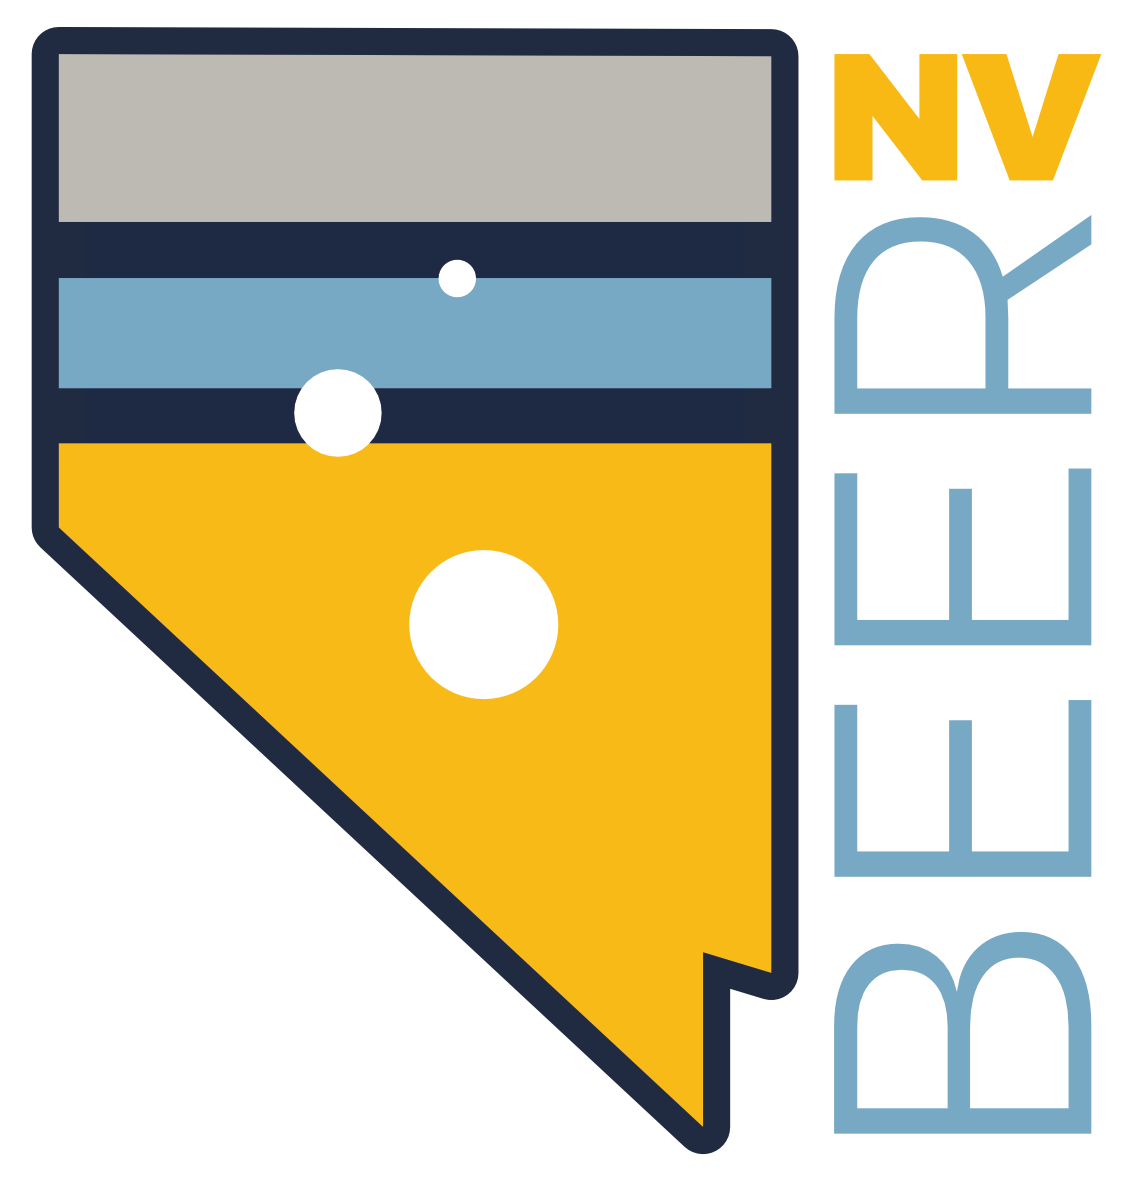 NV Craft Beer Association Logo